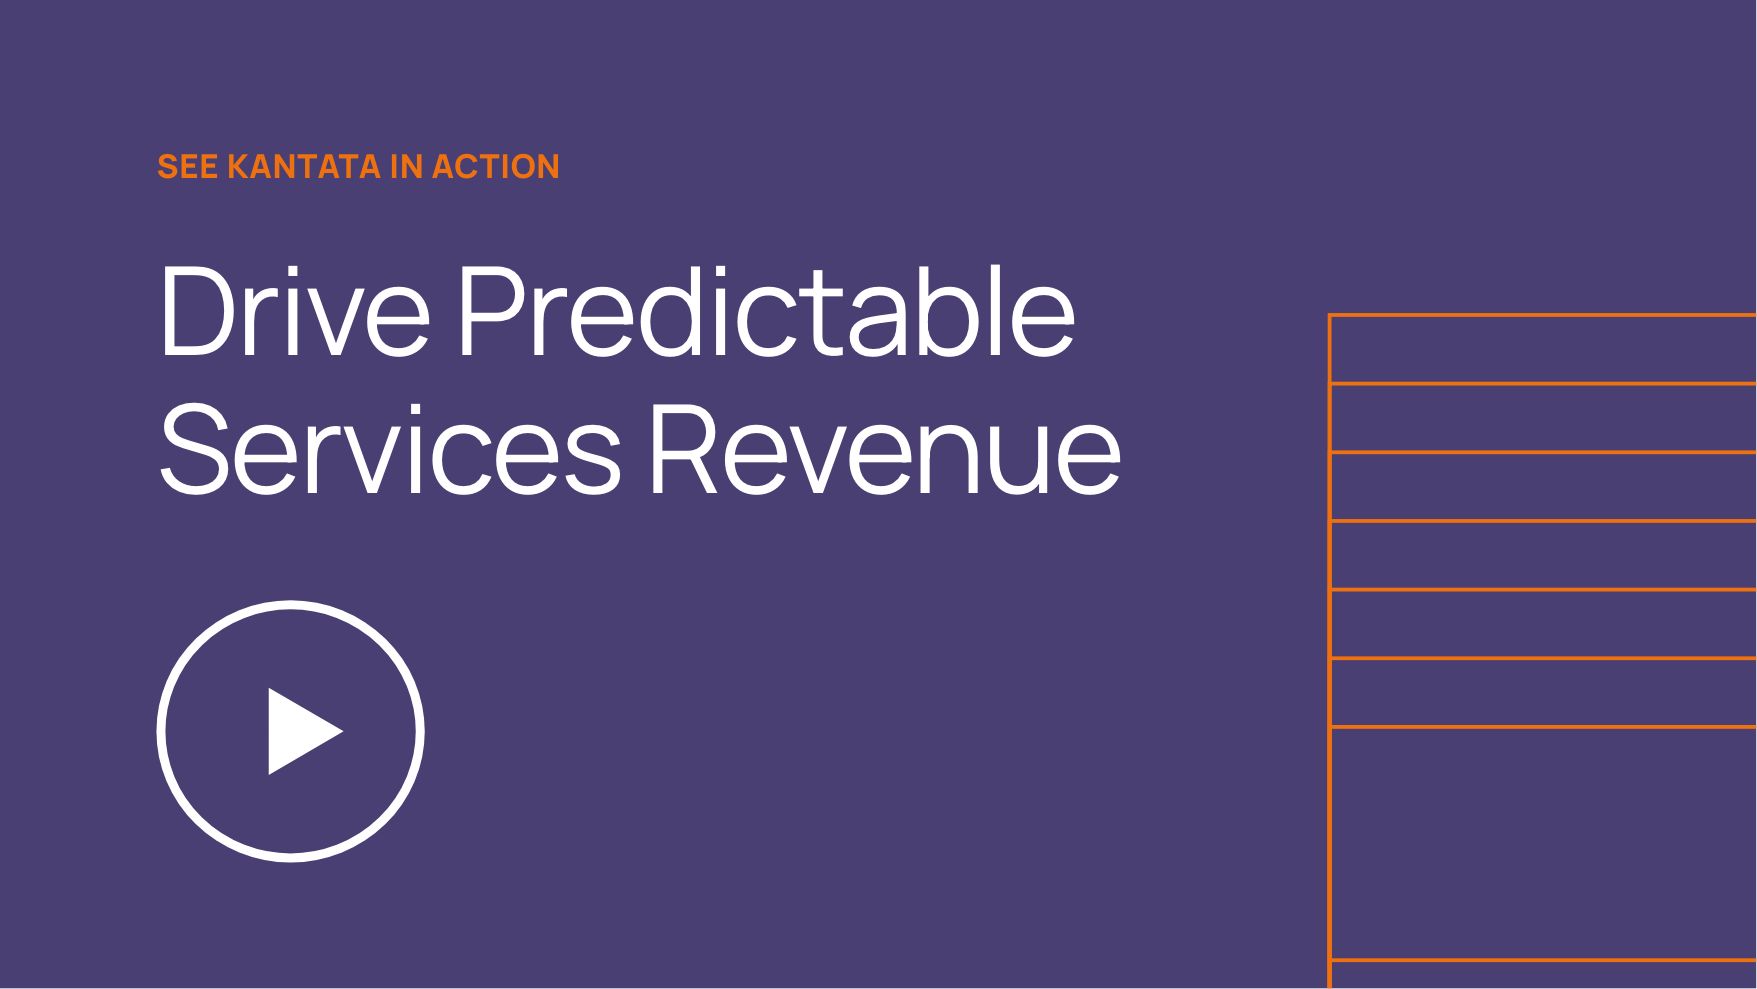 Forecast accuracy drives revenue predictability